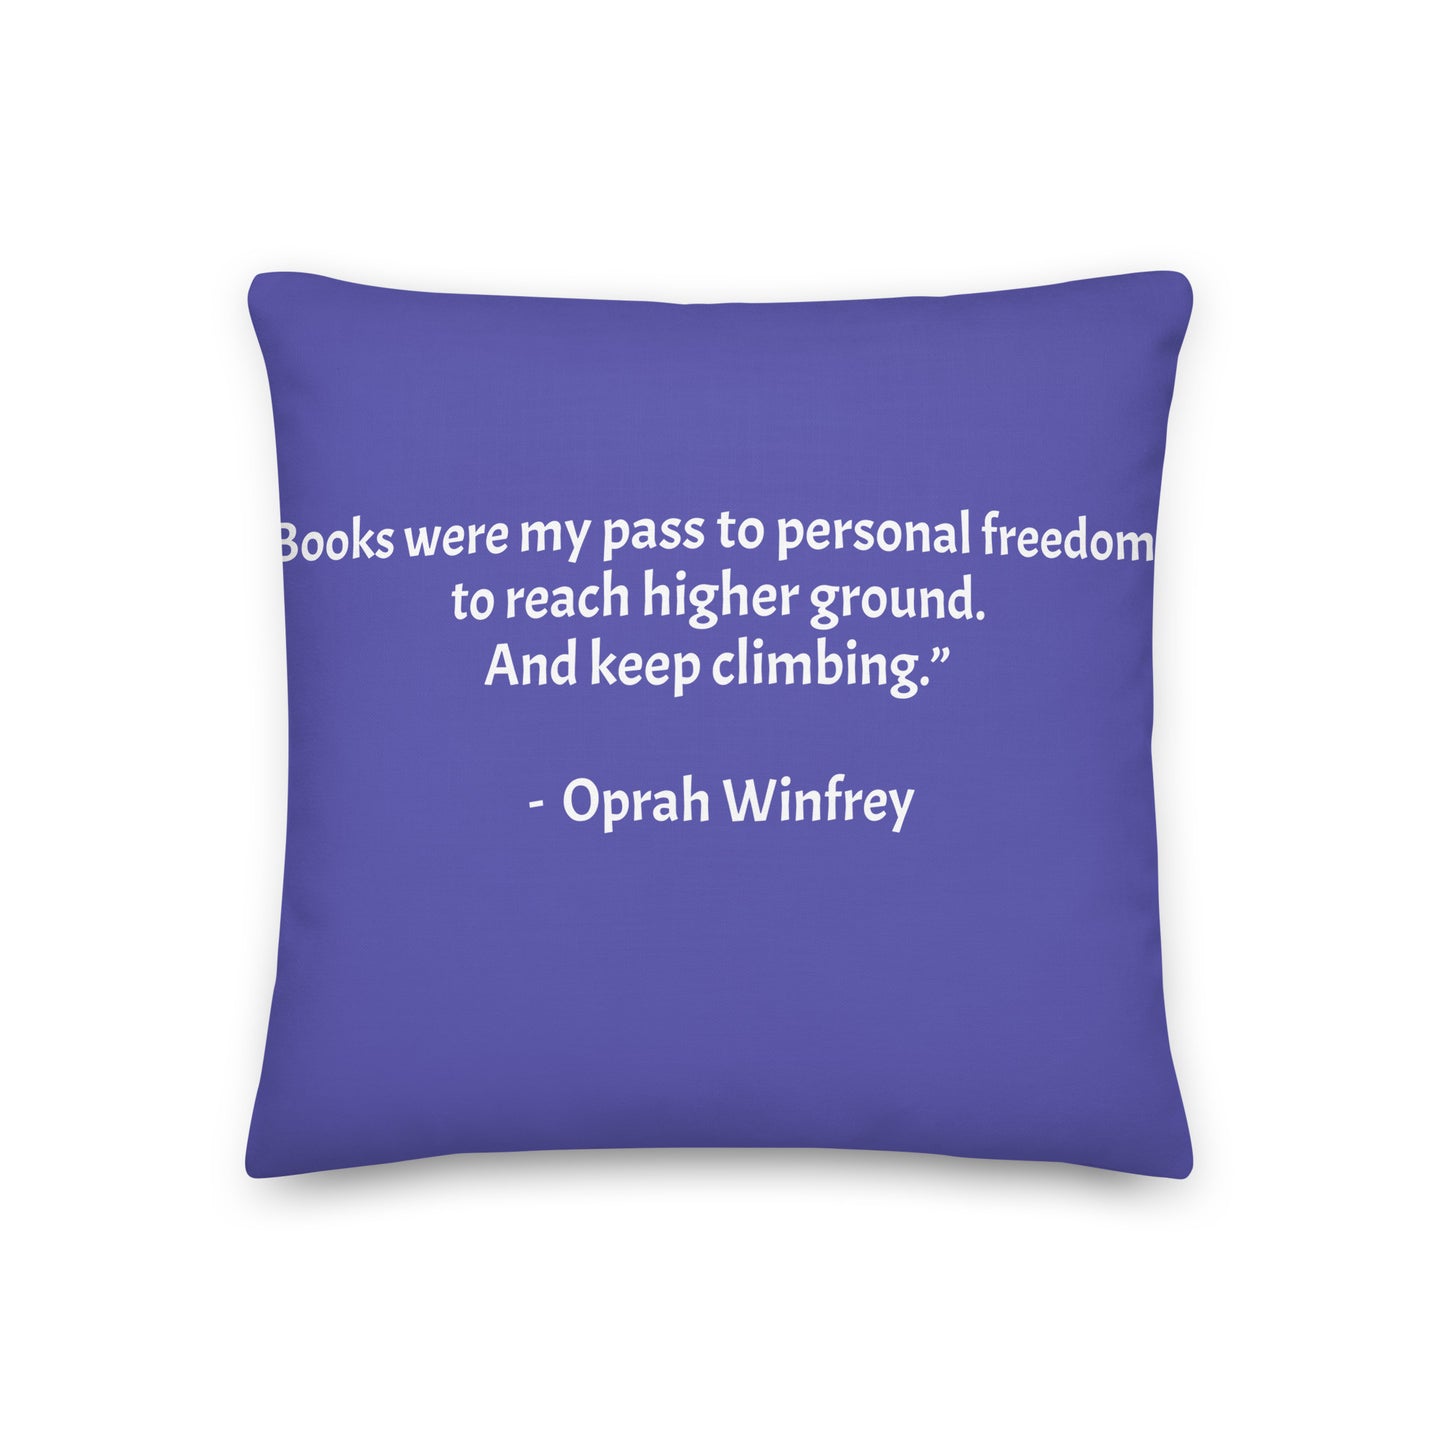 Books were my pass to personal freedom,  ...”   -  Oprah Winfrey - Premium Pillow